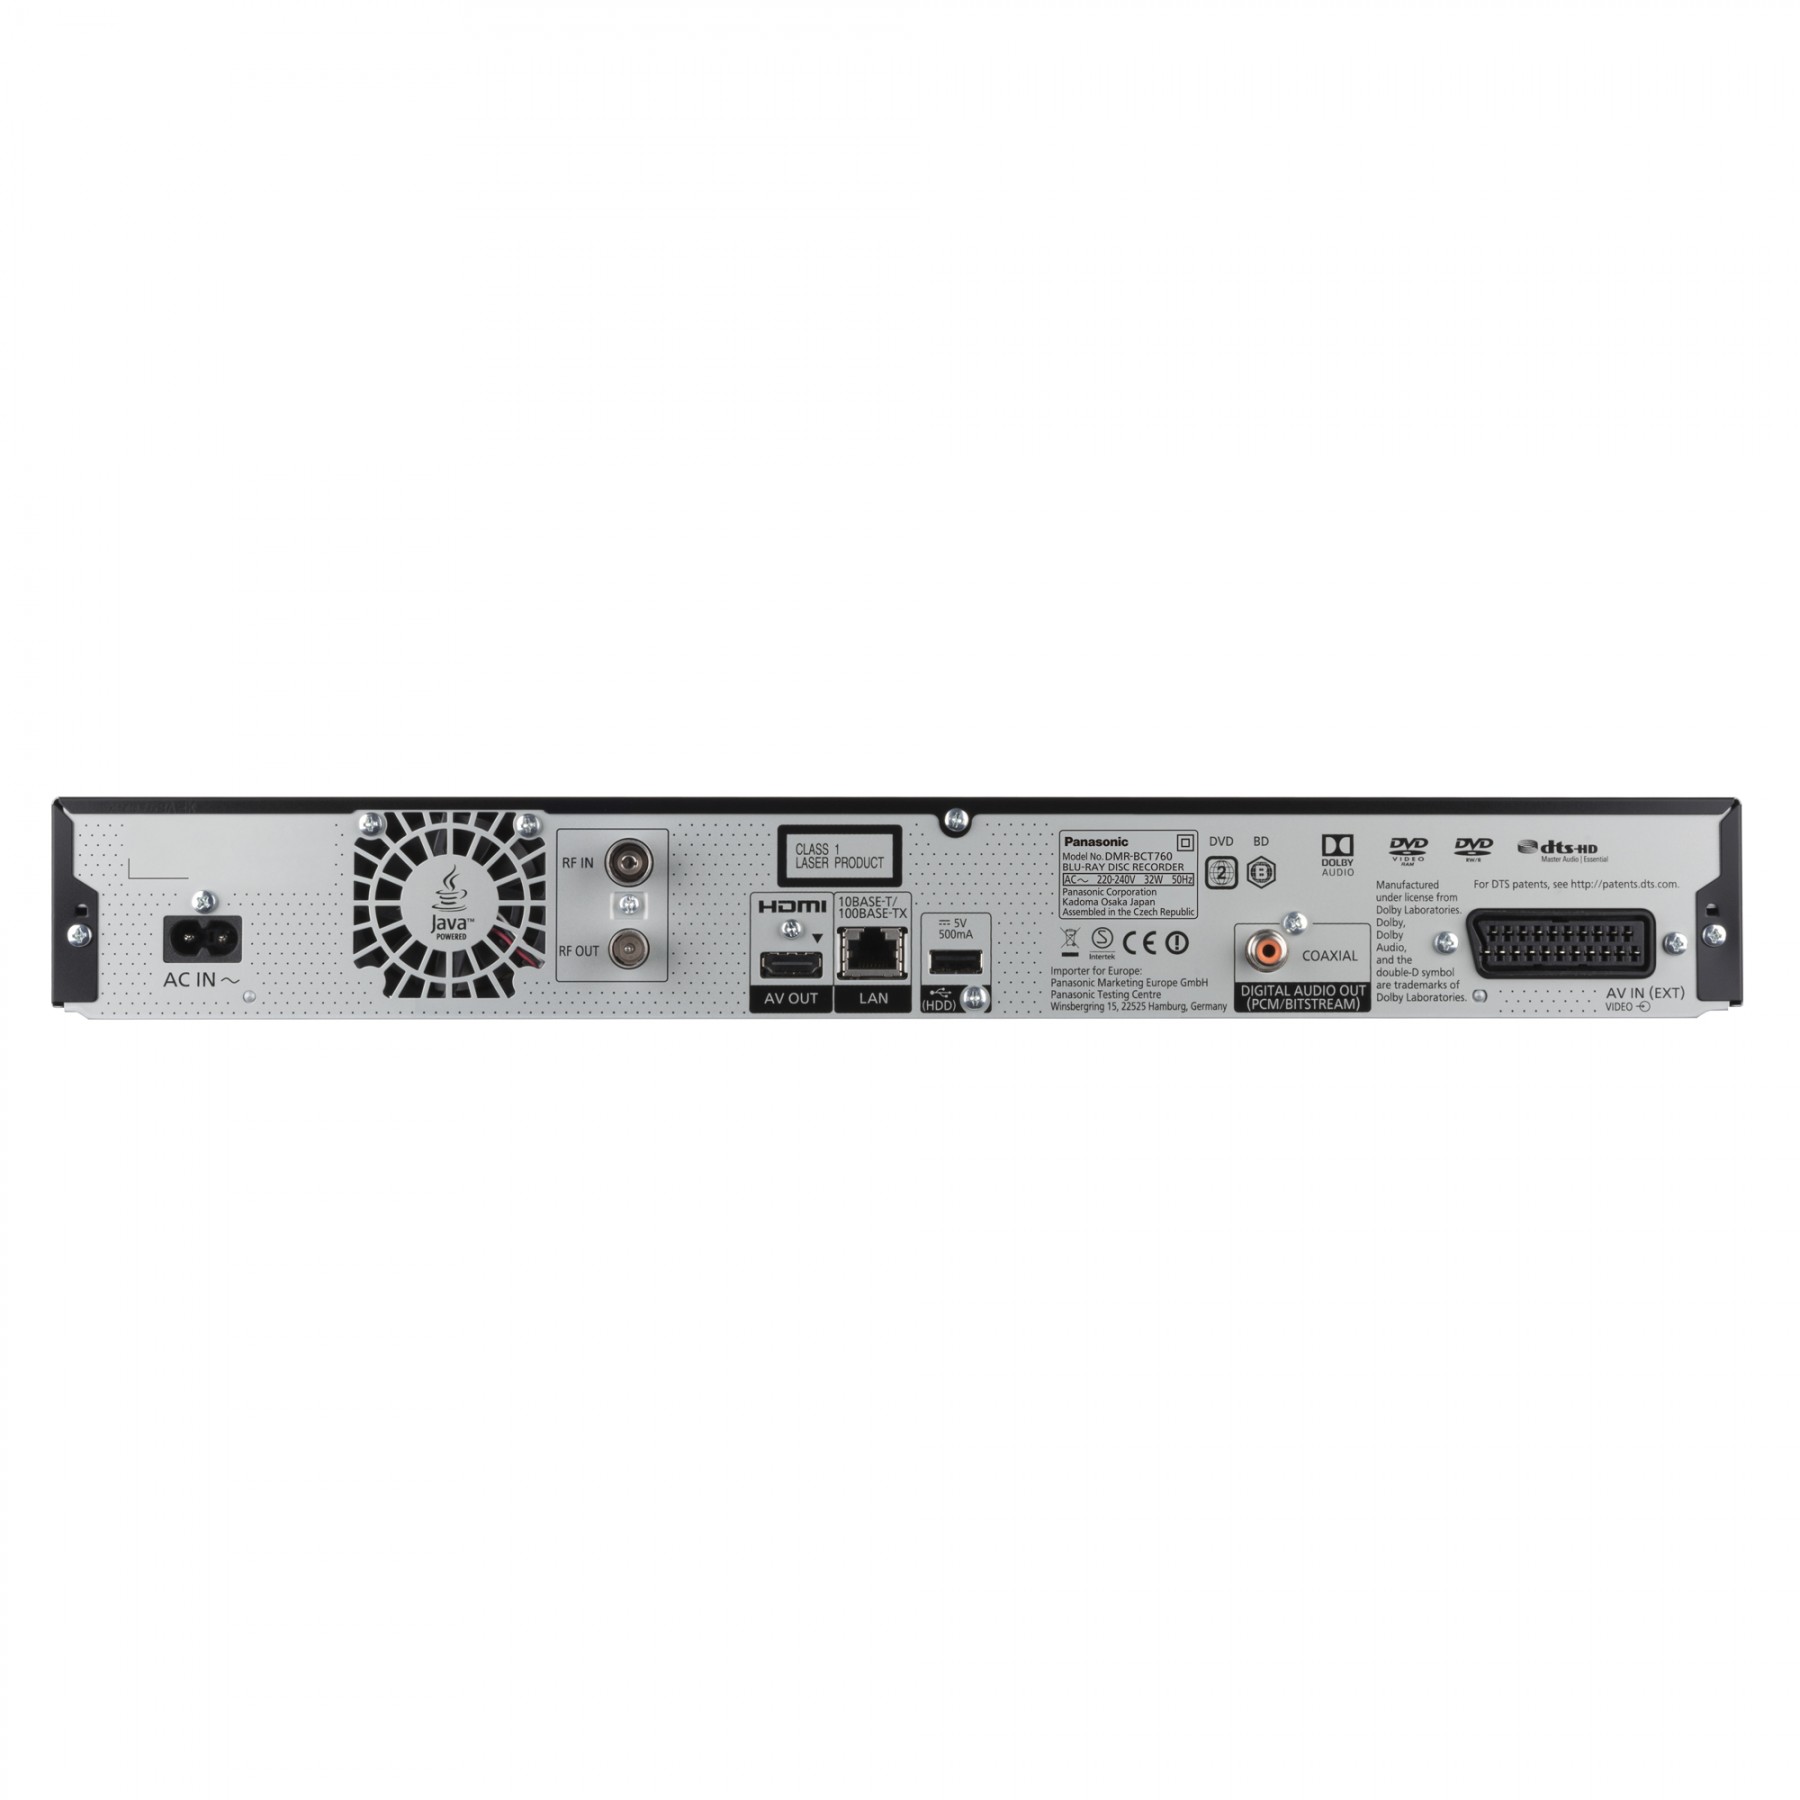 Panasonic DMR-BCT 760 EG schwarz Blu-ray Recorder